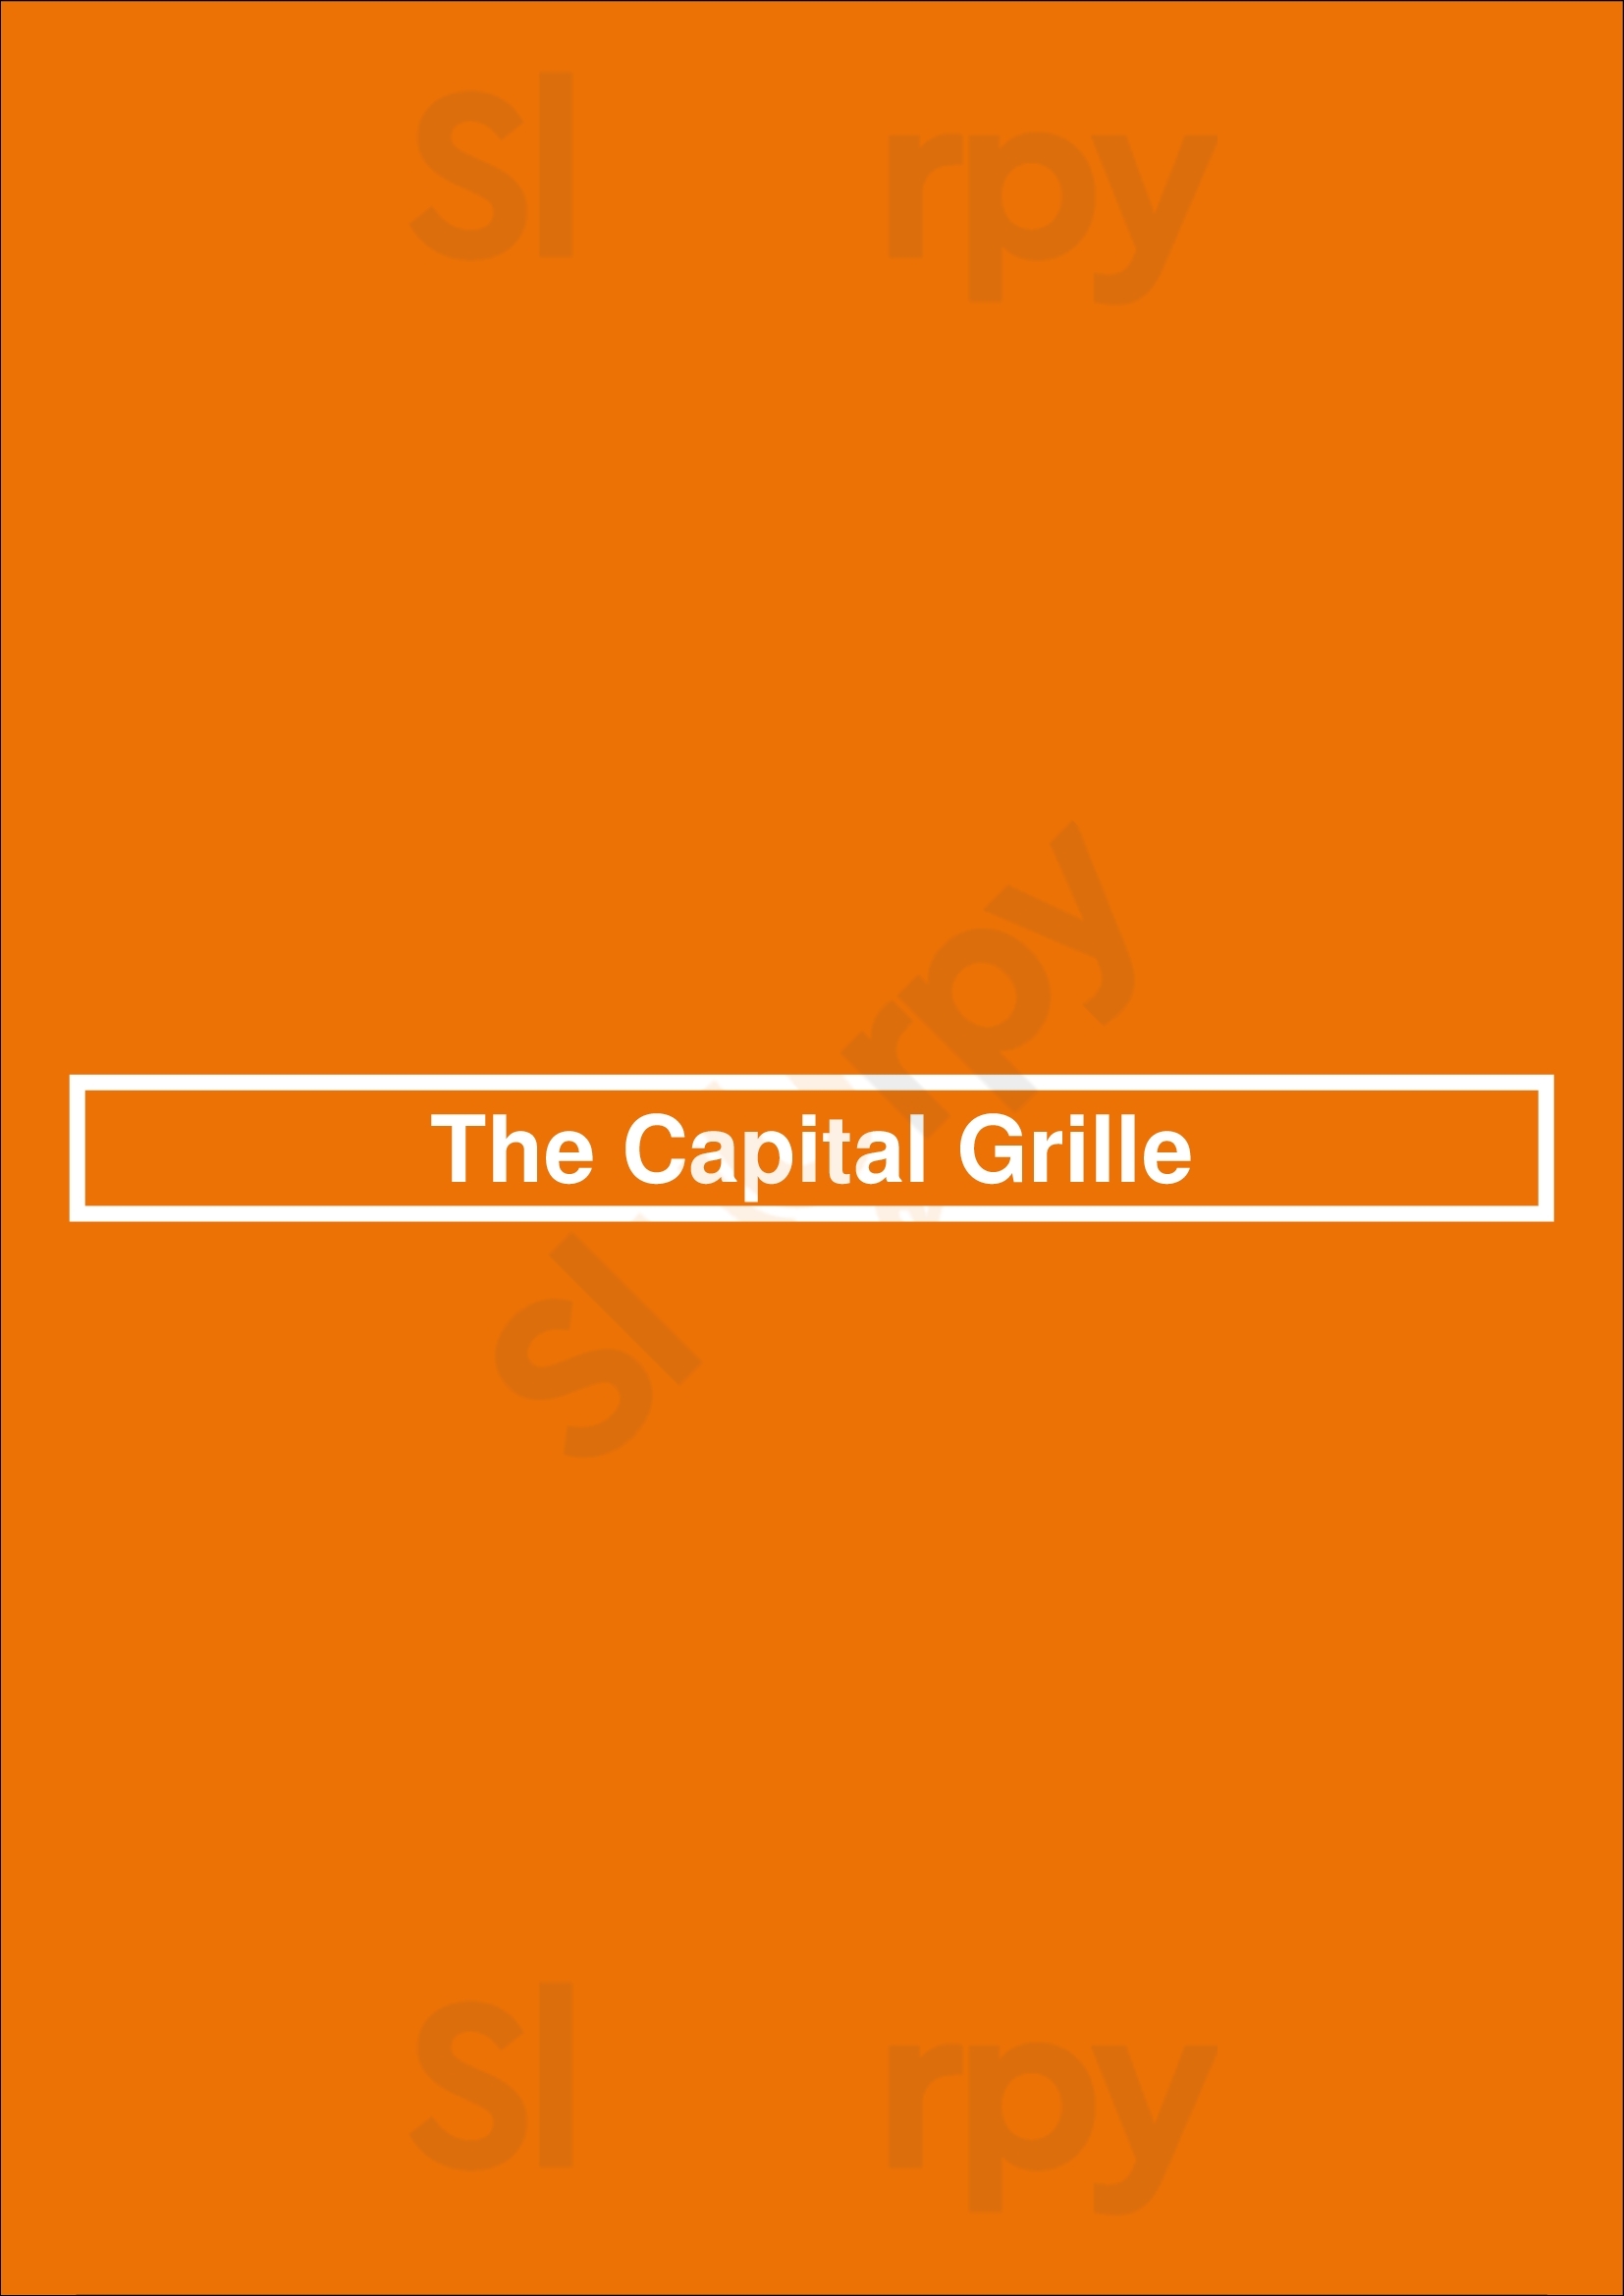 The Capital Grille Houston Menu - 1